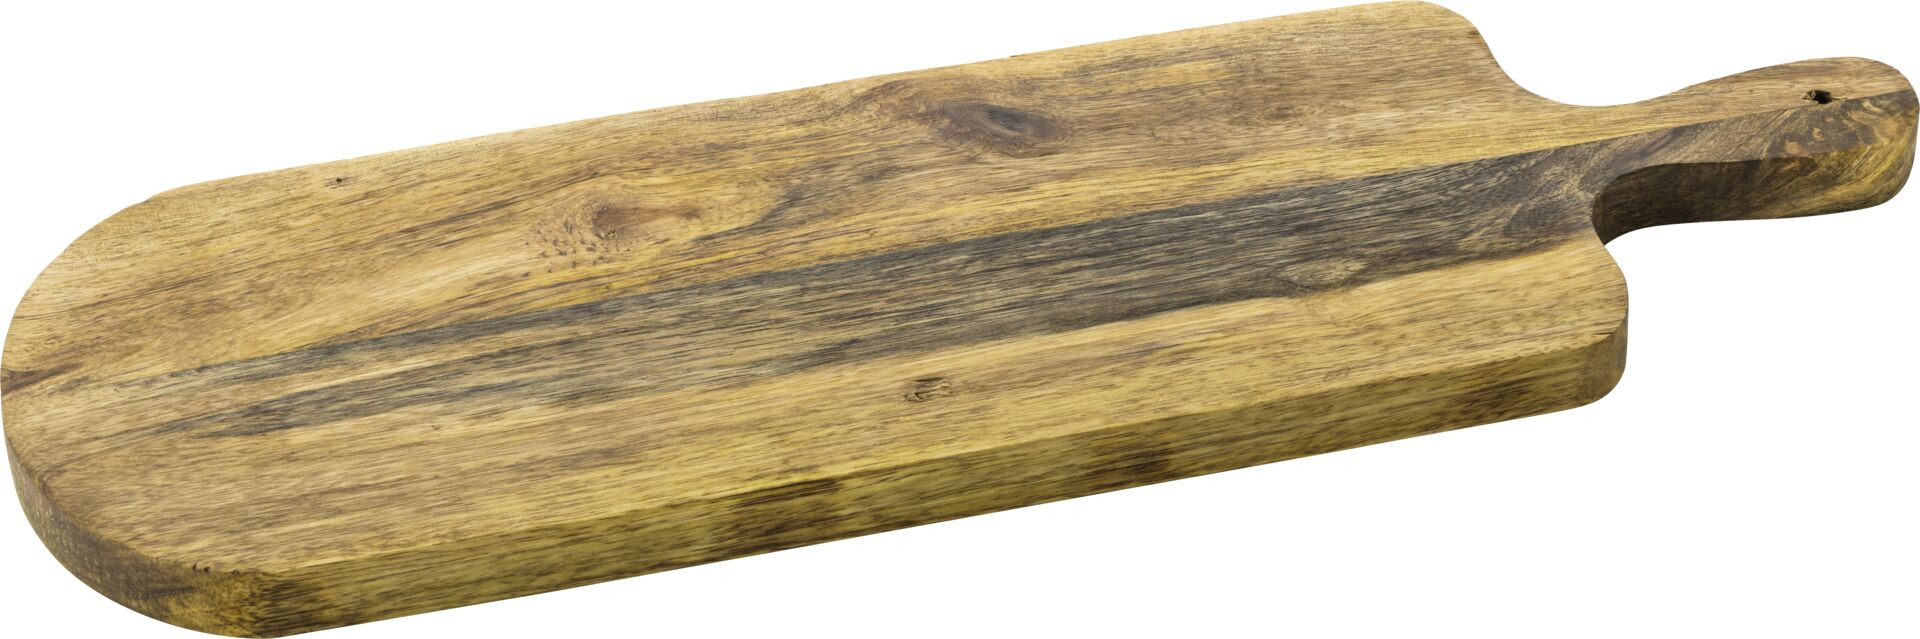 Holzbrett mit Griff 49 x 15 cm